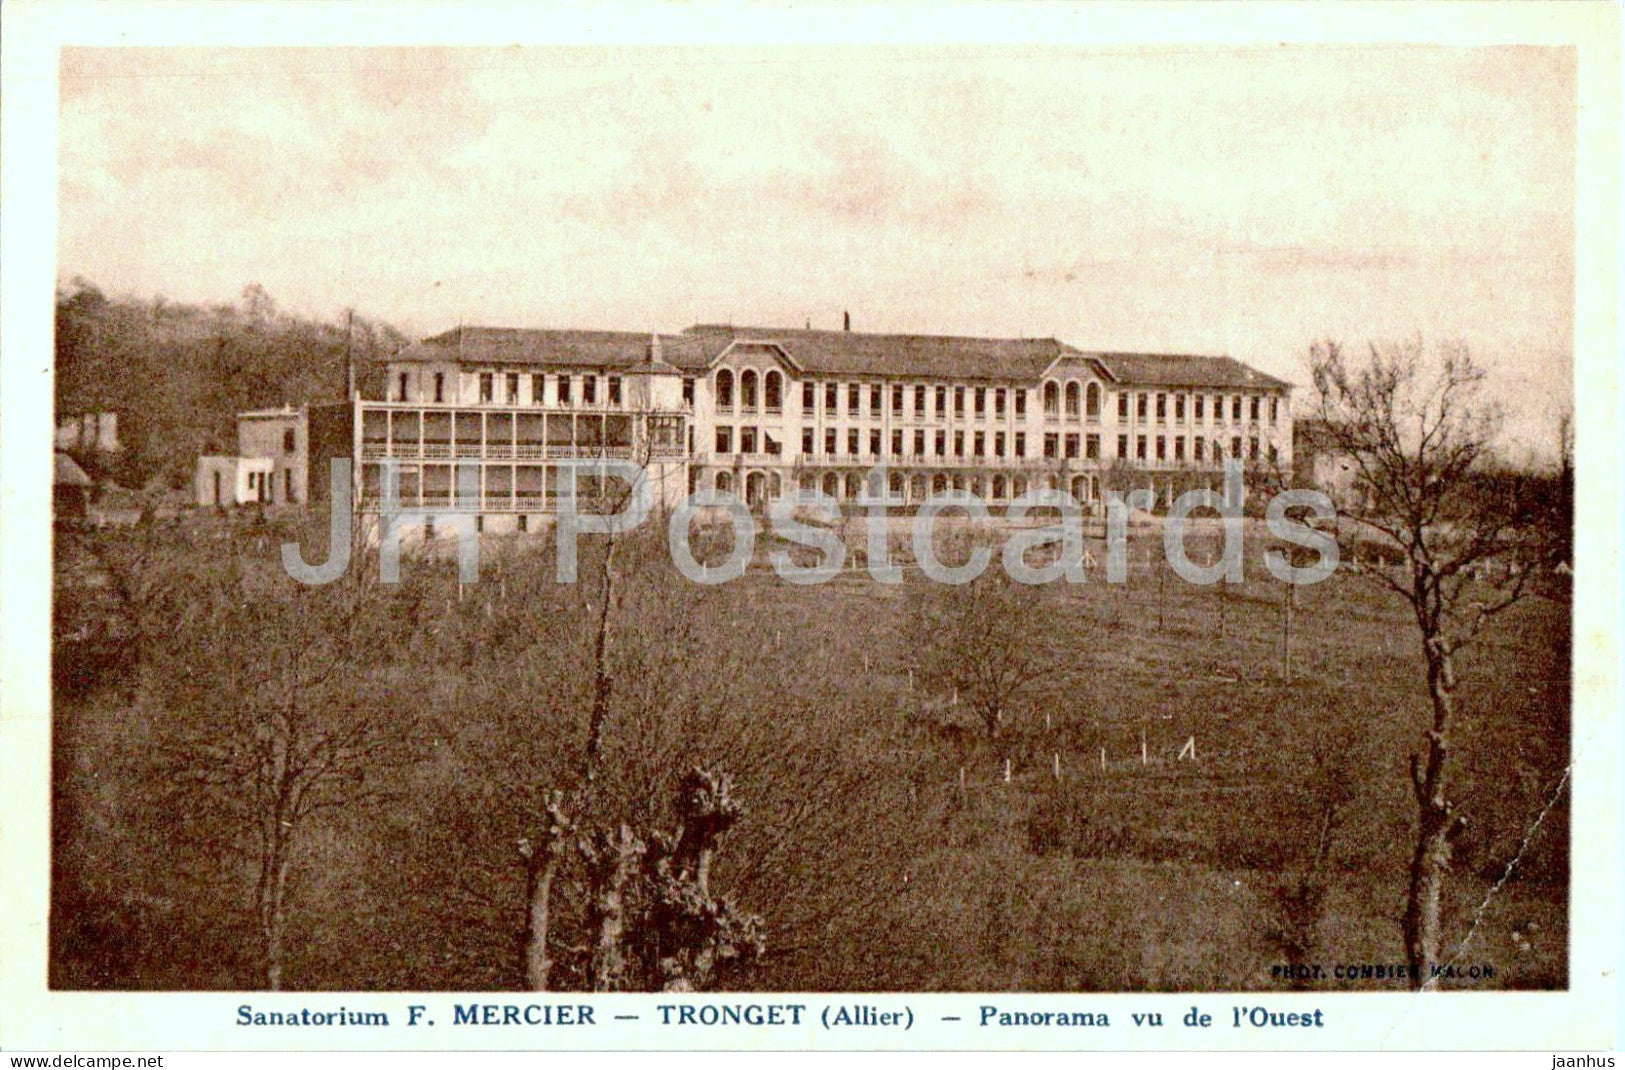 Sanatorium F. Mercier - Tronget - Panorama vu de l'Ouest - old postcard - 1938 - France - used - JH Postcards